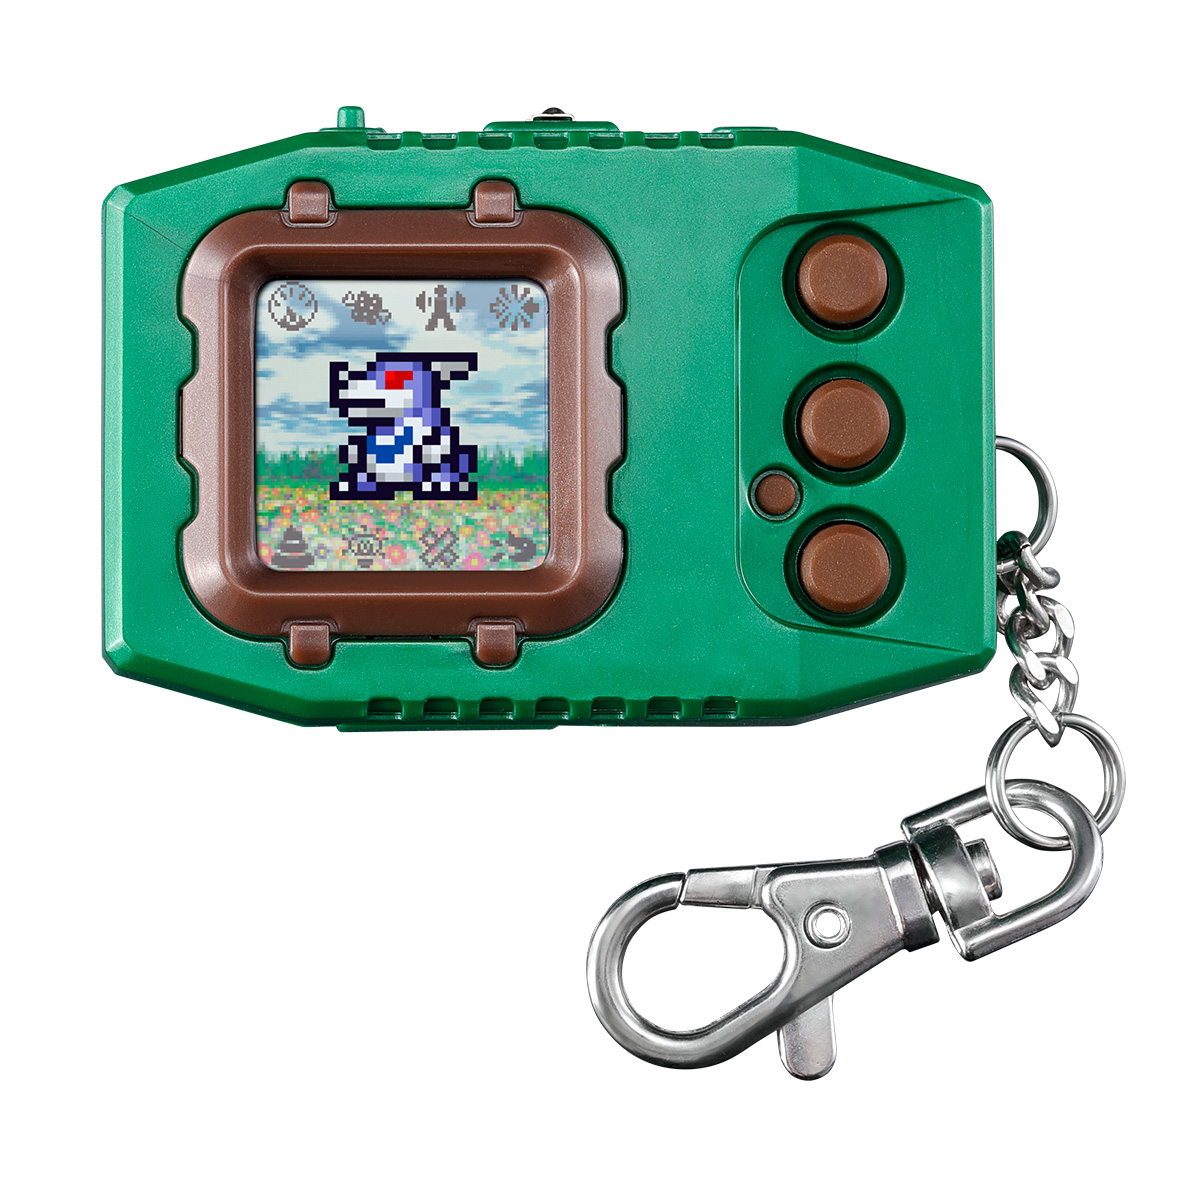 Представлены цвета маятника Digimon 4, 5, ноль